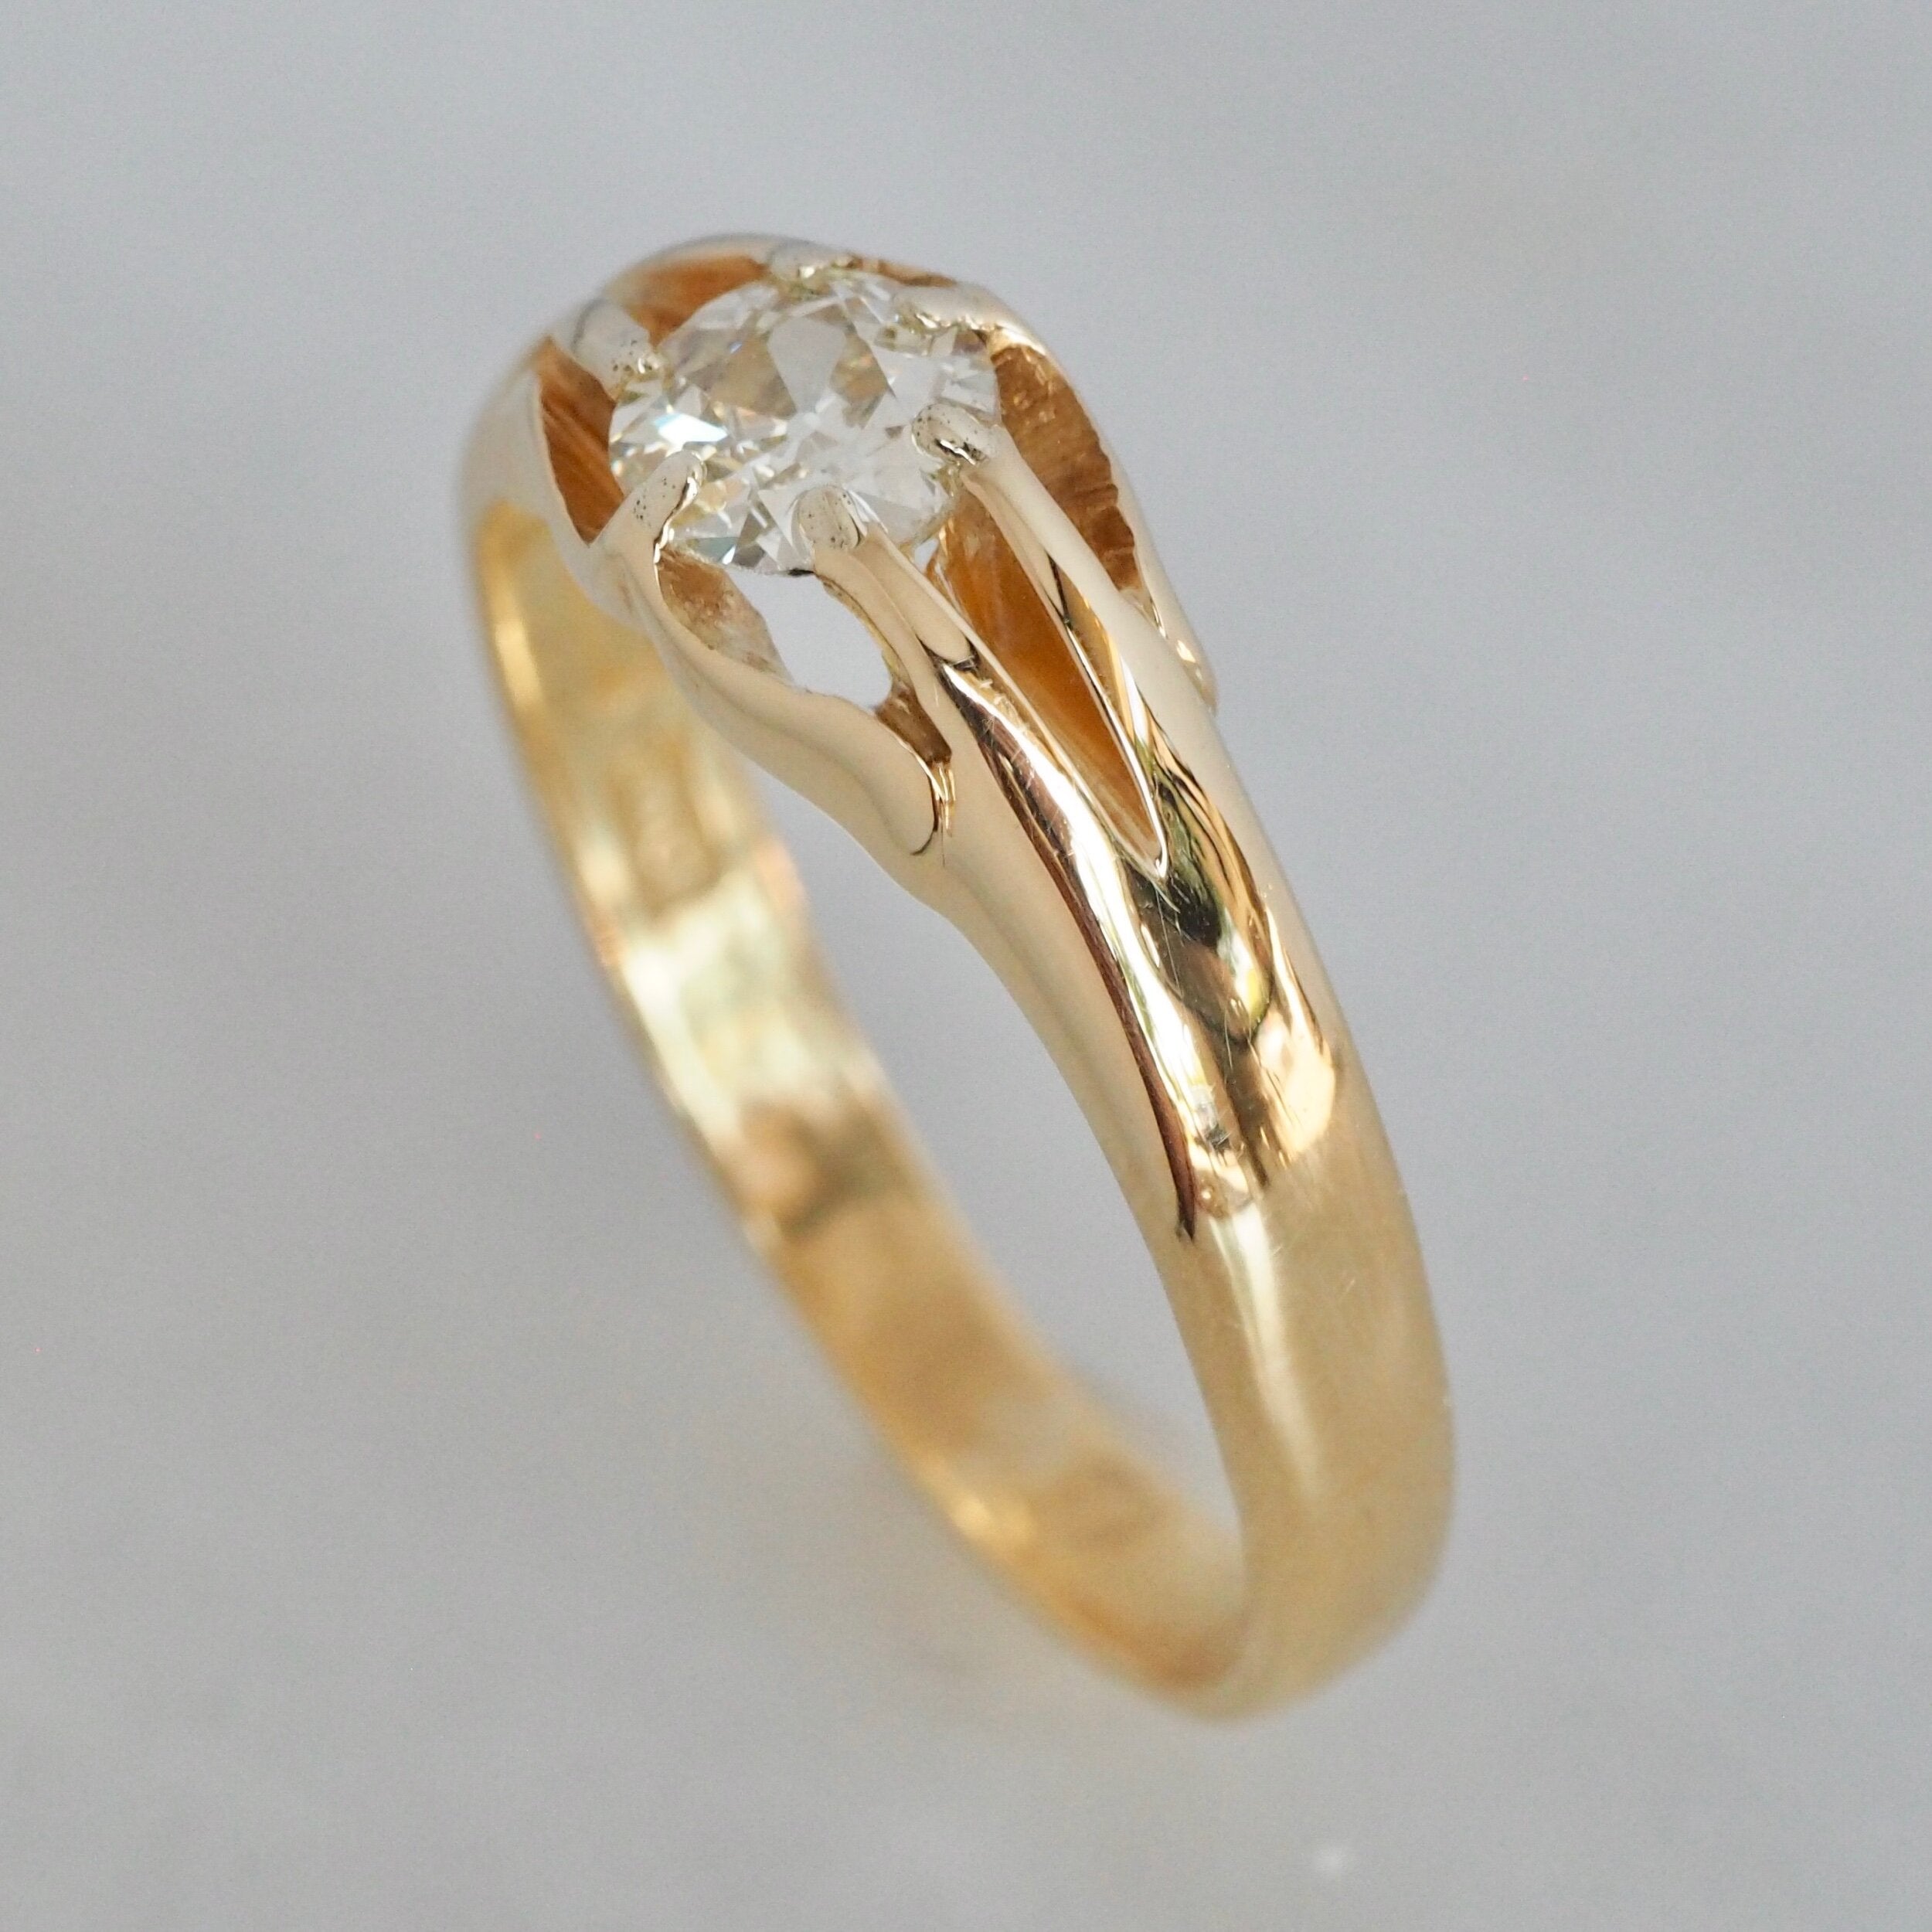 Art Nouveau 18k Gold Old European Cut Diamond Ring